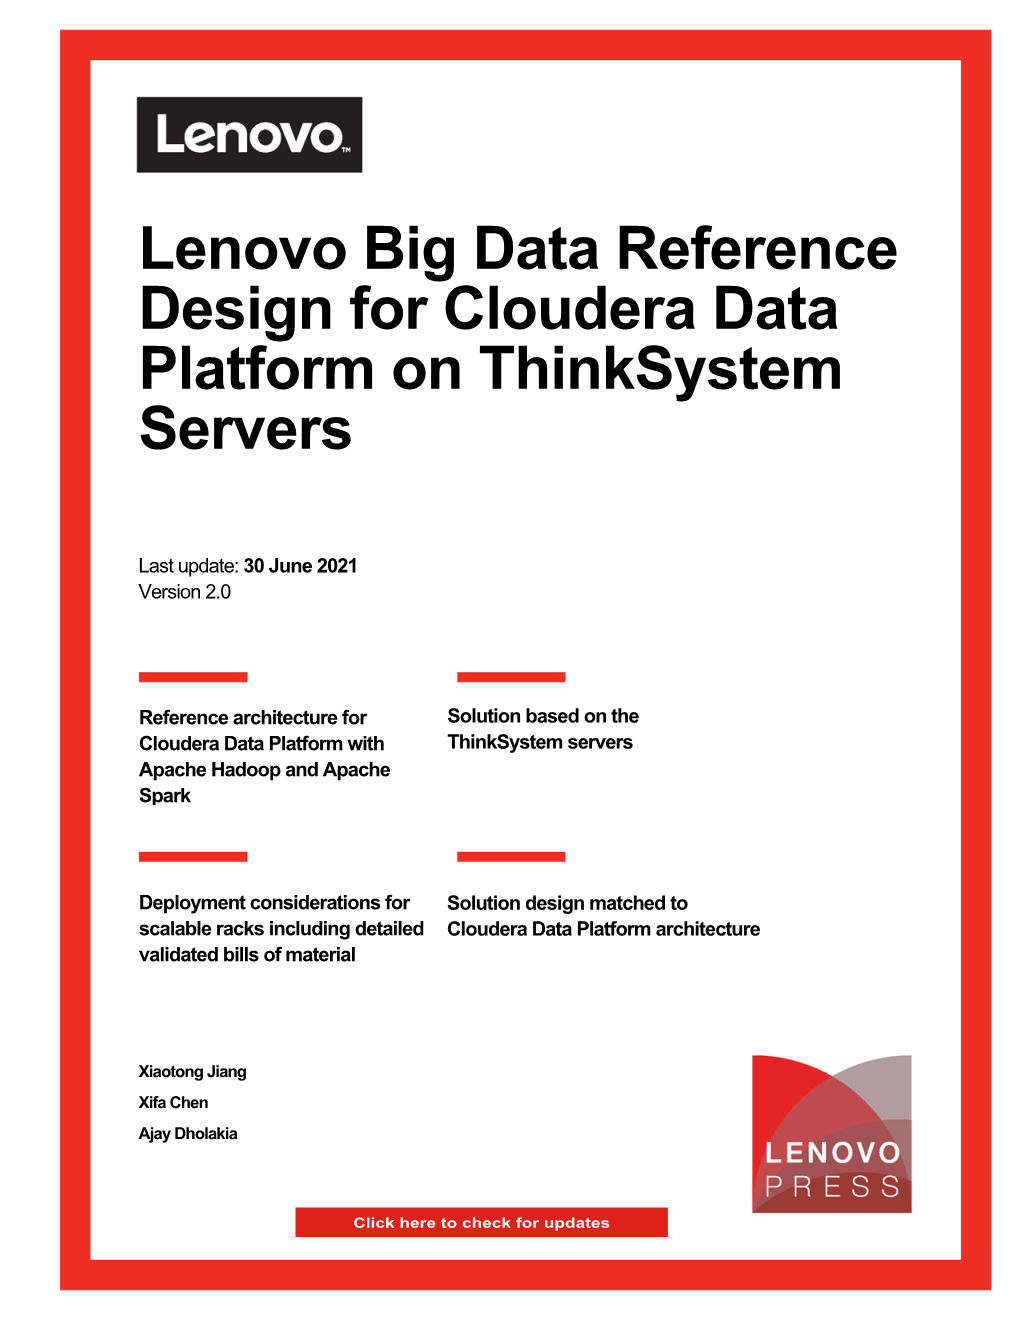 Lenovo Big Data Reference Design for Cloudera Data Platform on Thinksystem Servers